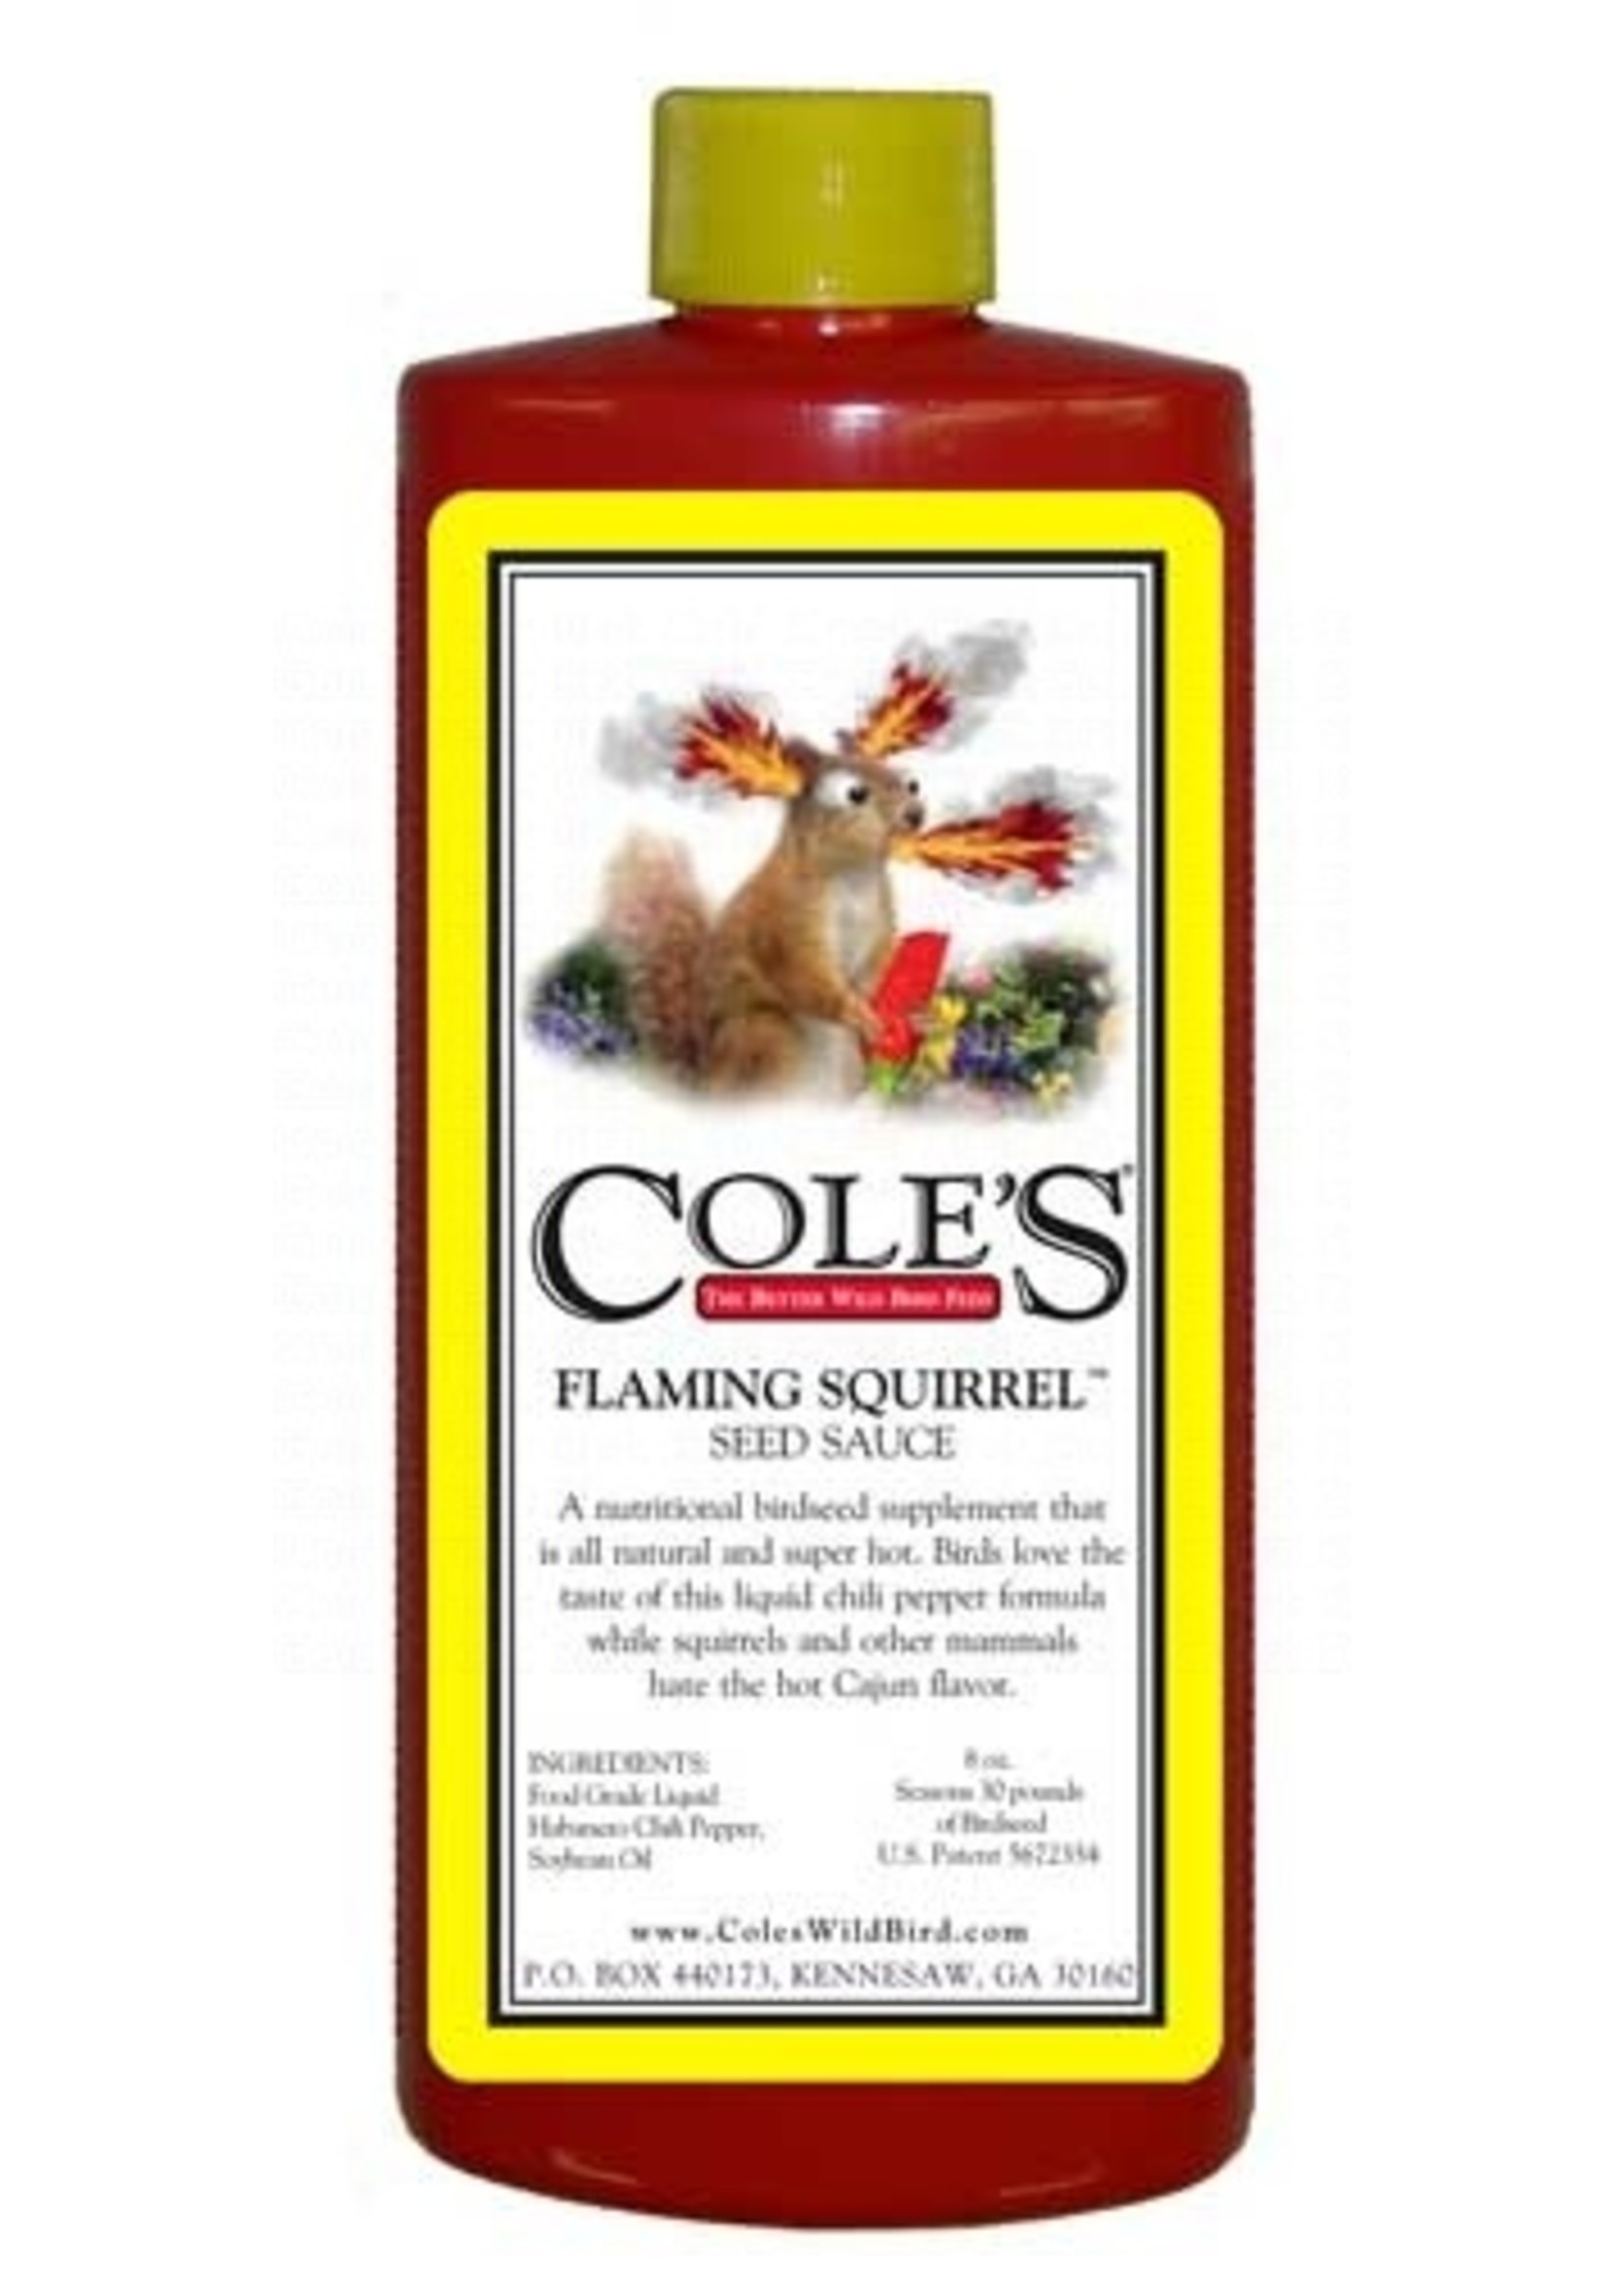 Cole's Hot Pepper Sauce 8 oz